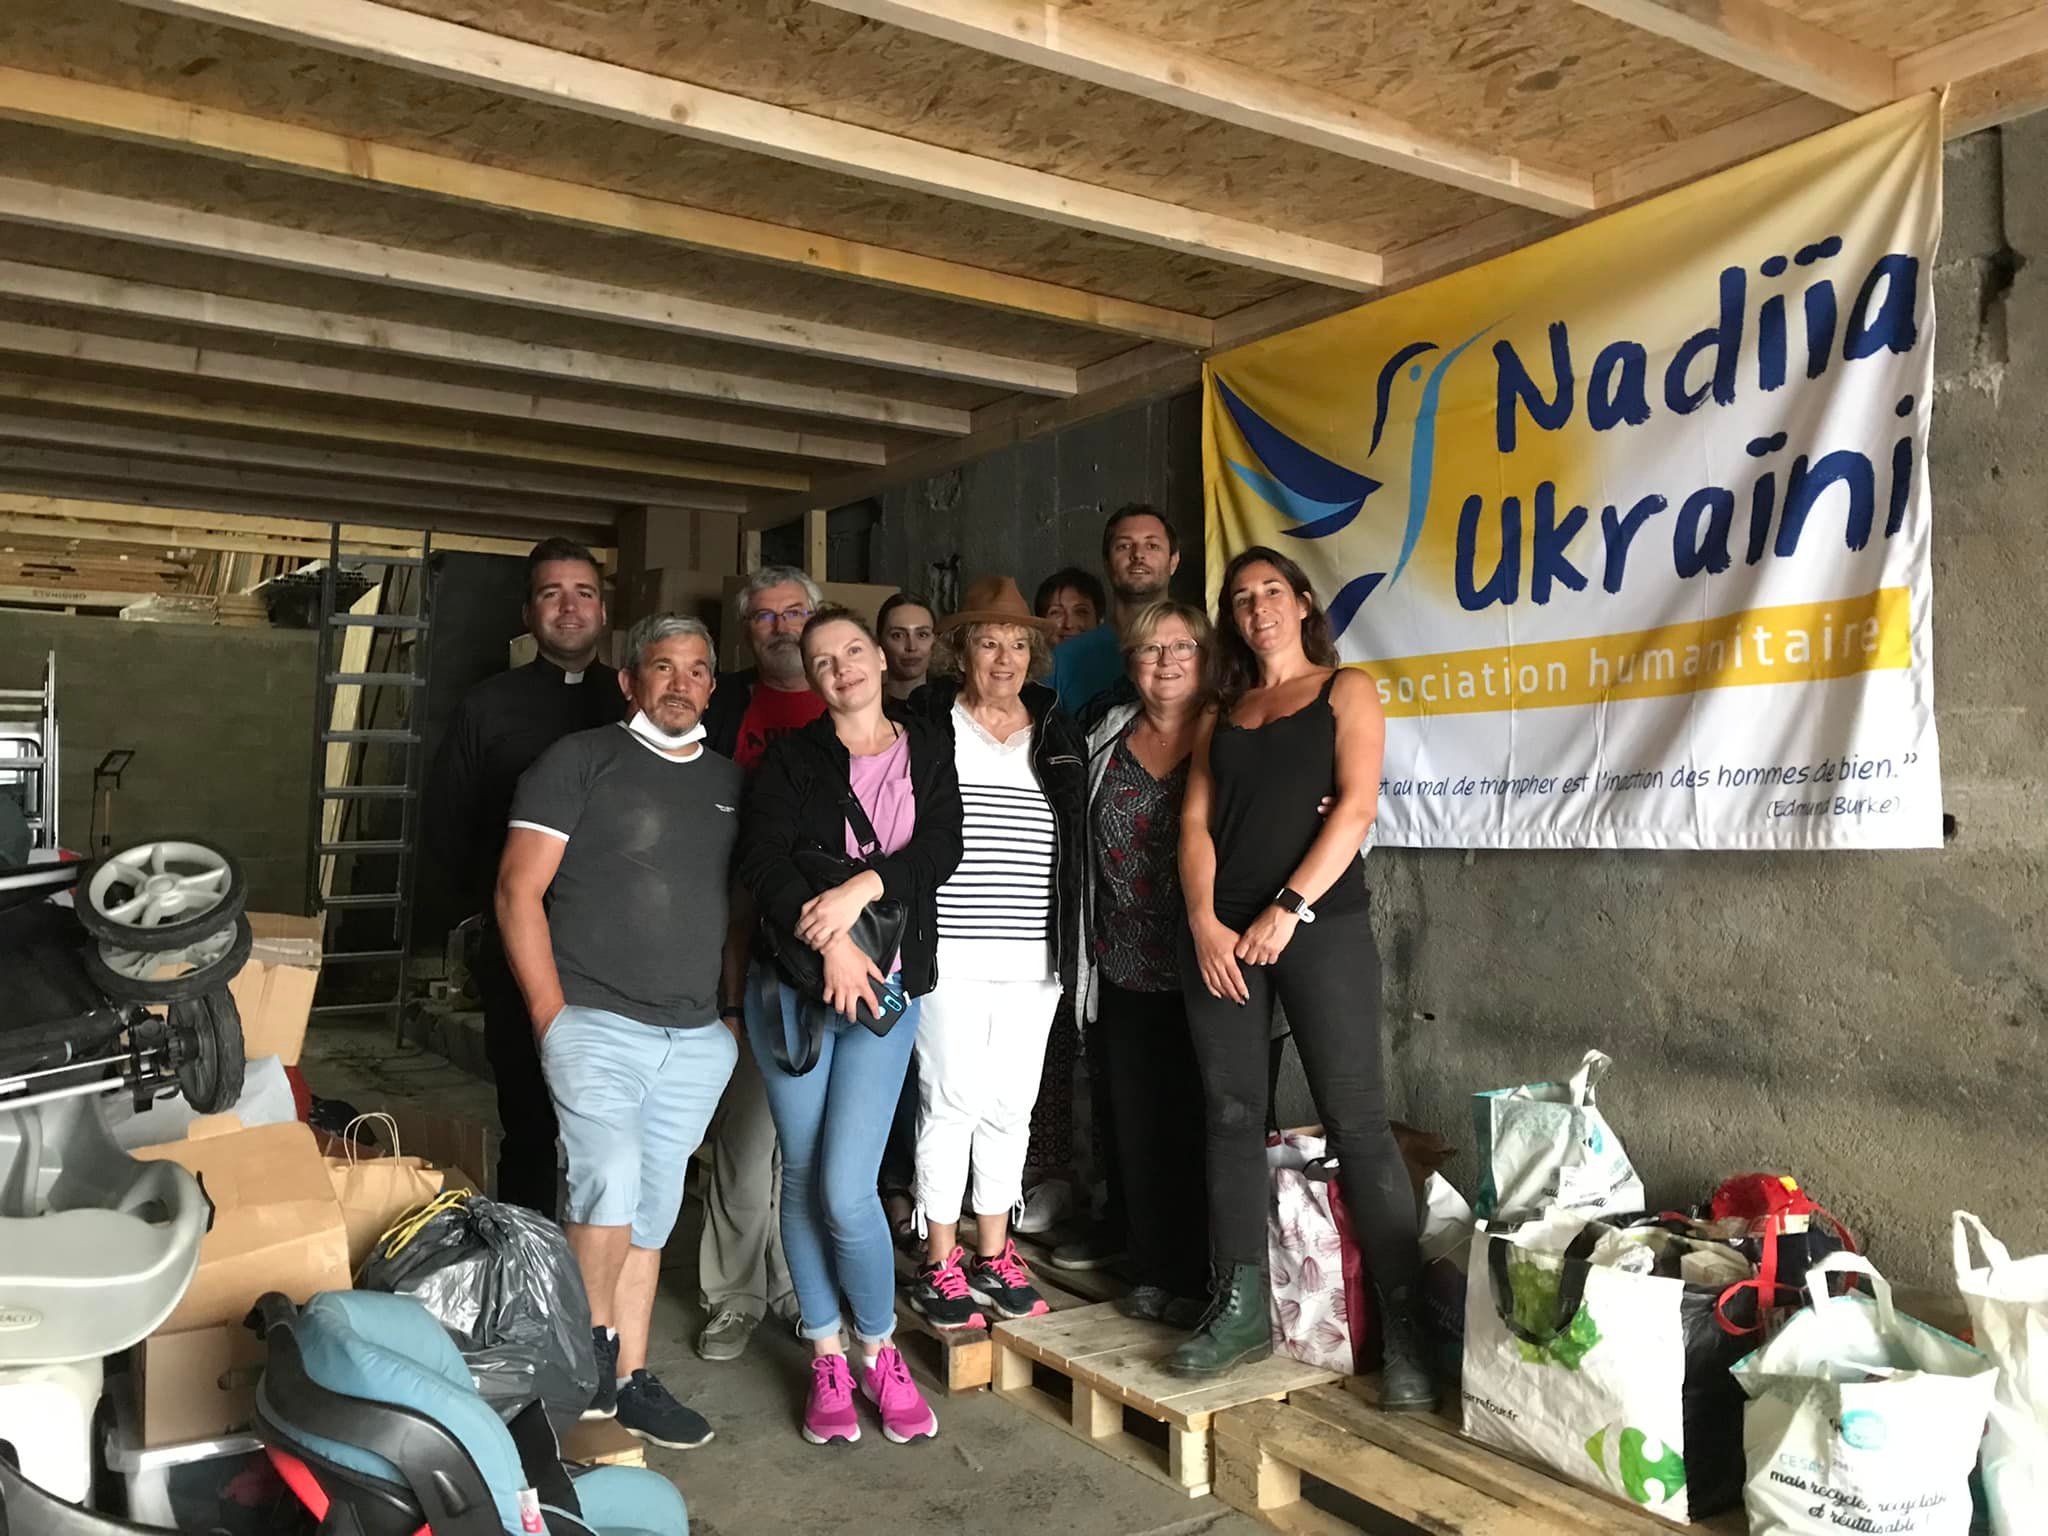 L'association Nadiia UkraÏNI à BESOIN DE DONS